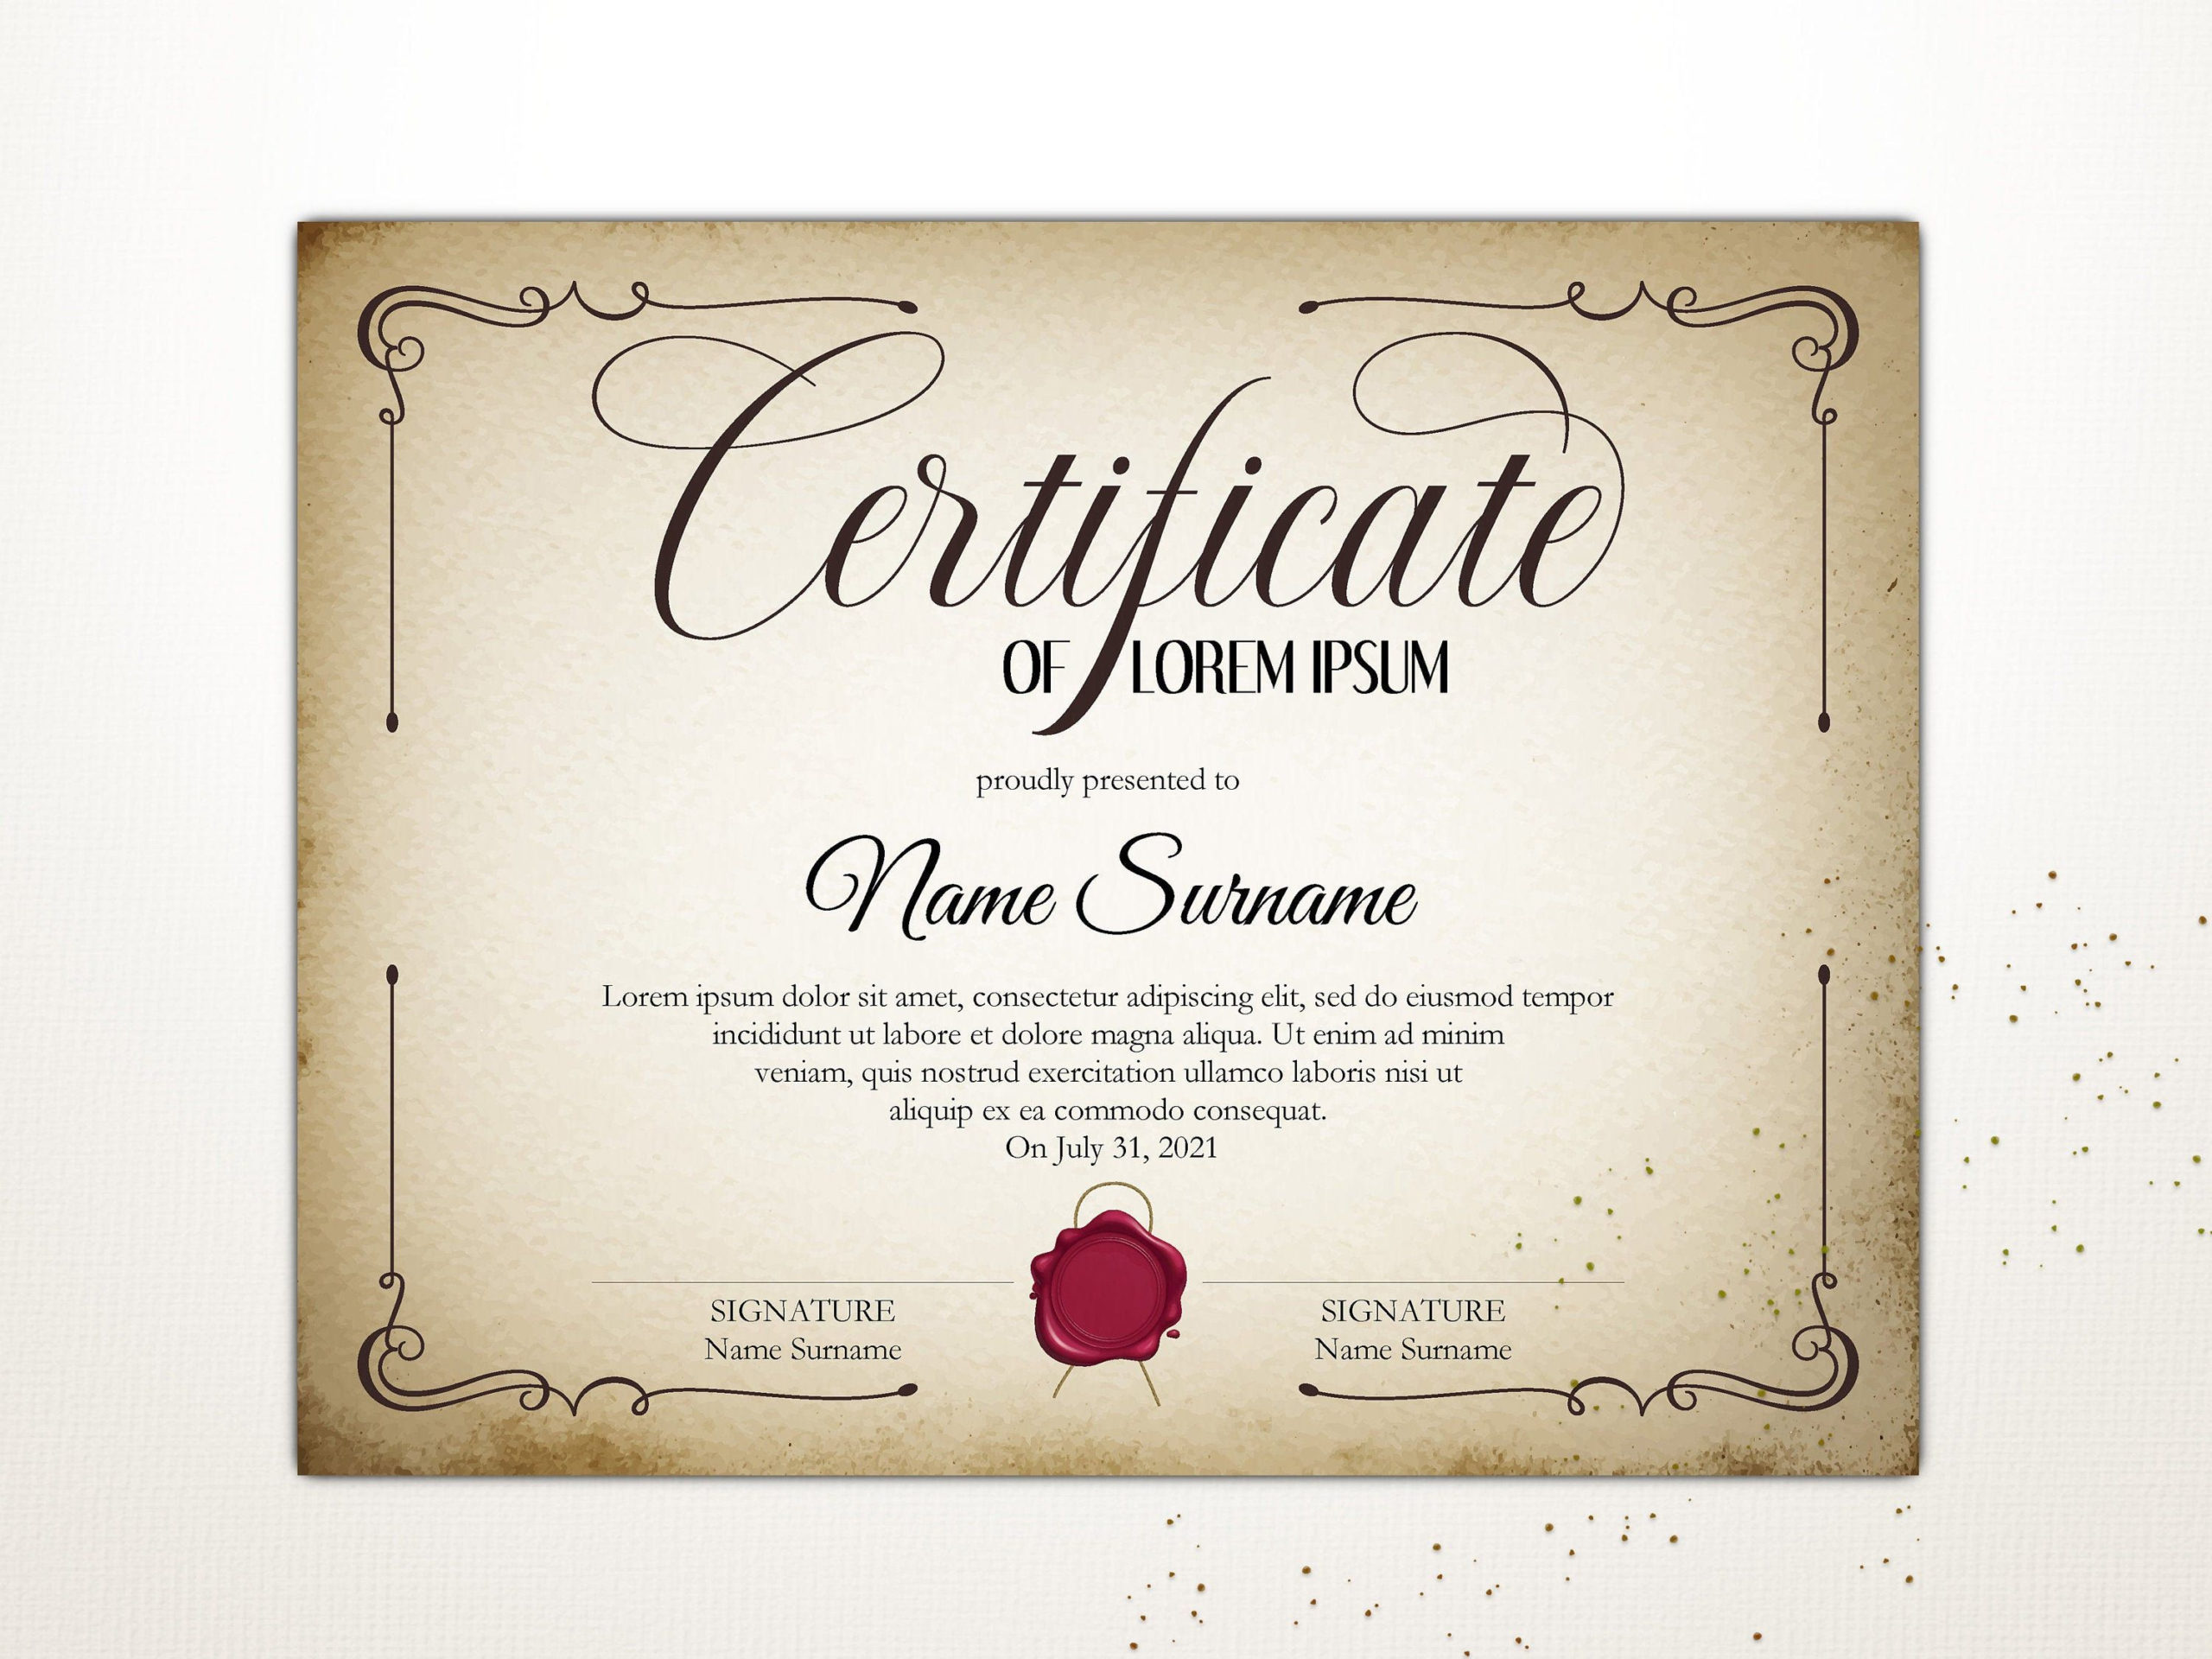 Vintage Certificate Template, Editable Certificate Throughout Editable Stock Certificate Template